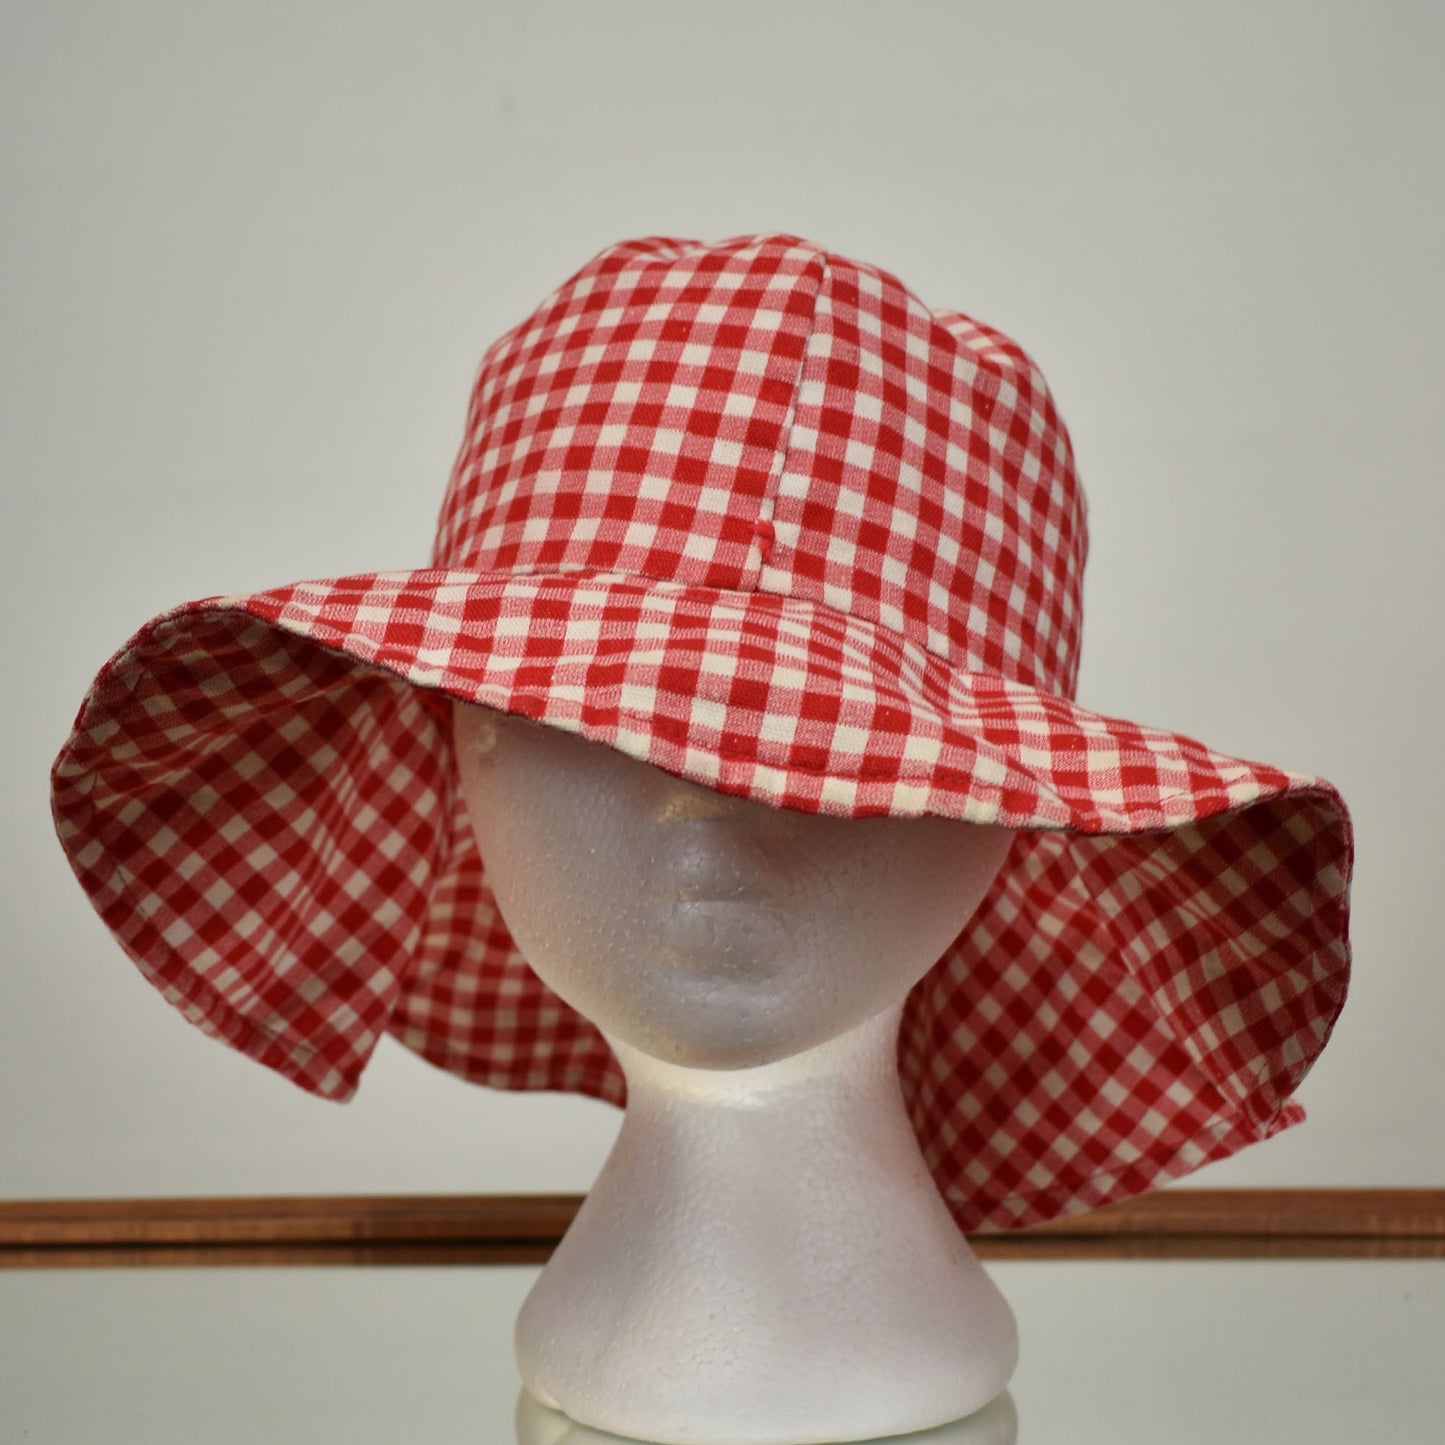 Vintage 70s Floppy Cotton Sun Hat Paul B. Stone - Gingham Pattern - California Country Girl Style Womens - Small/Medium